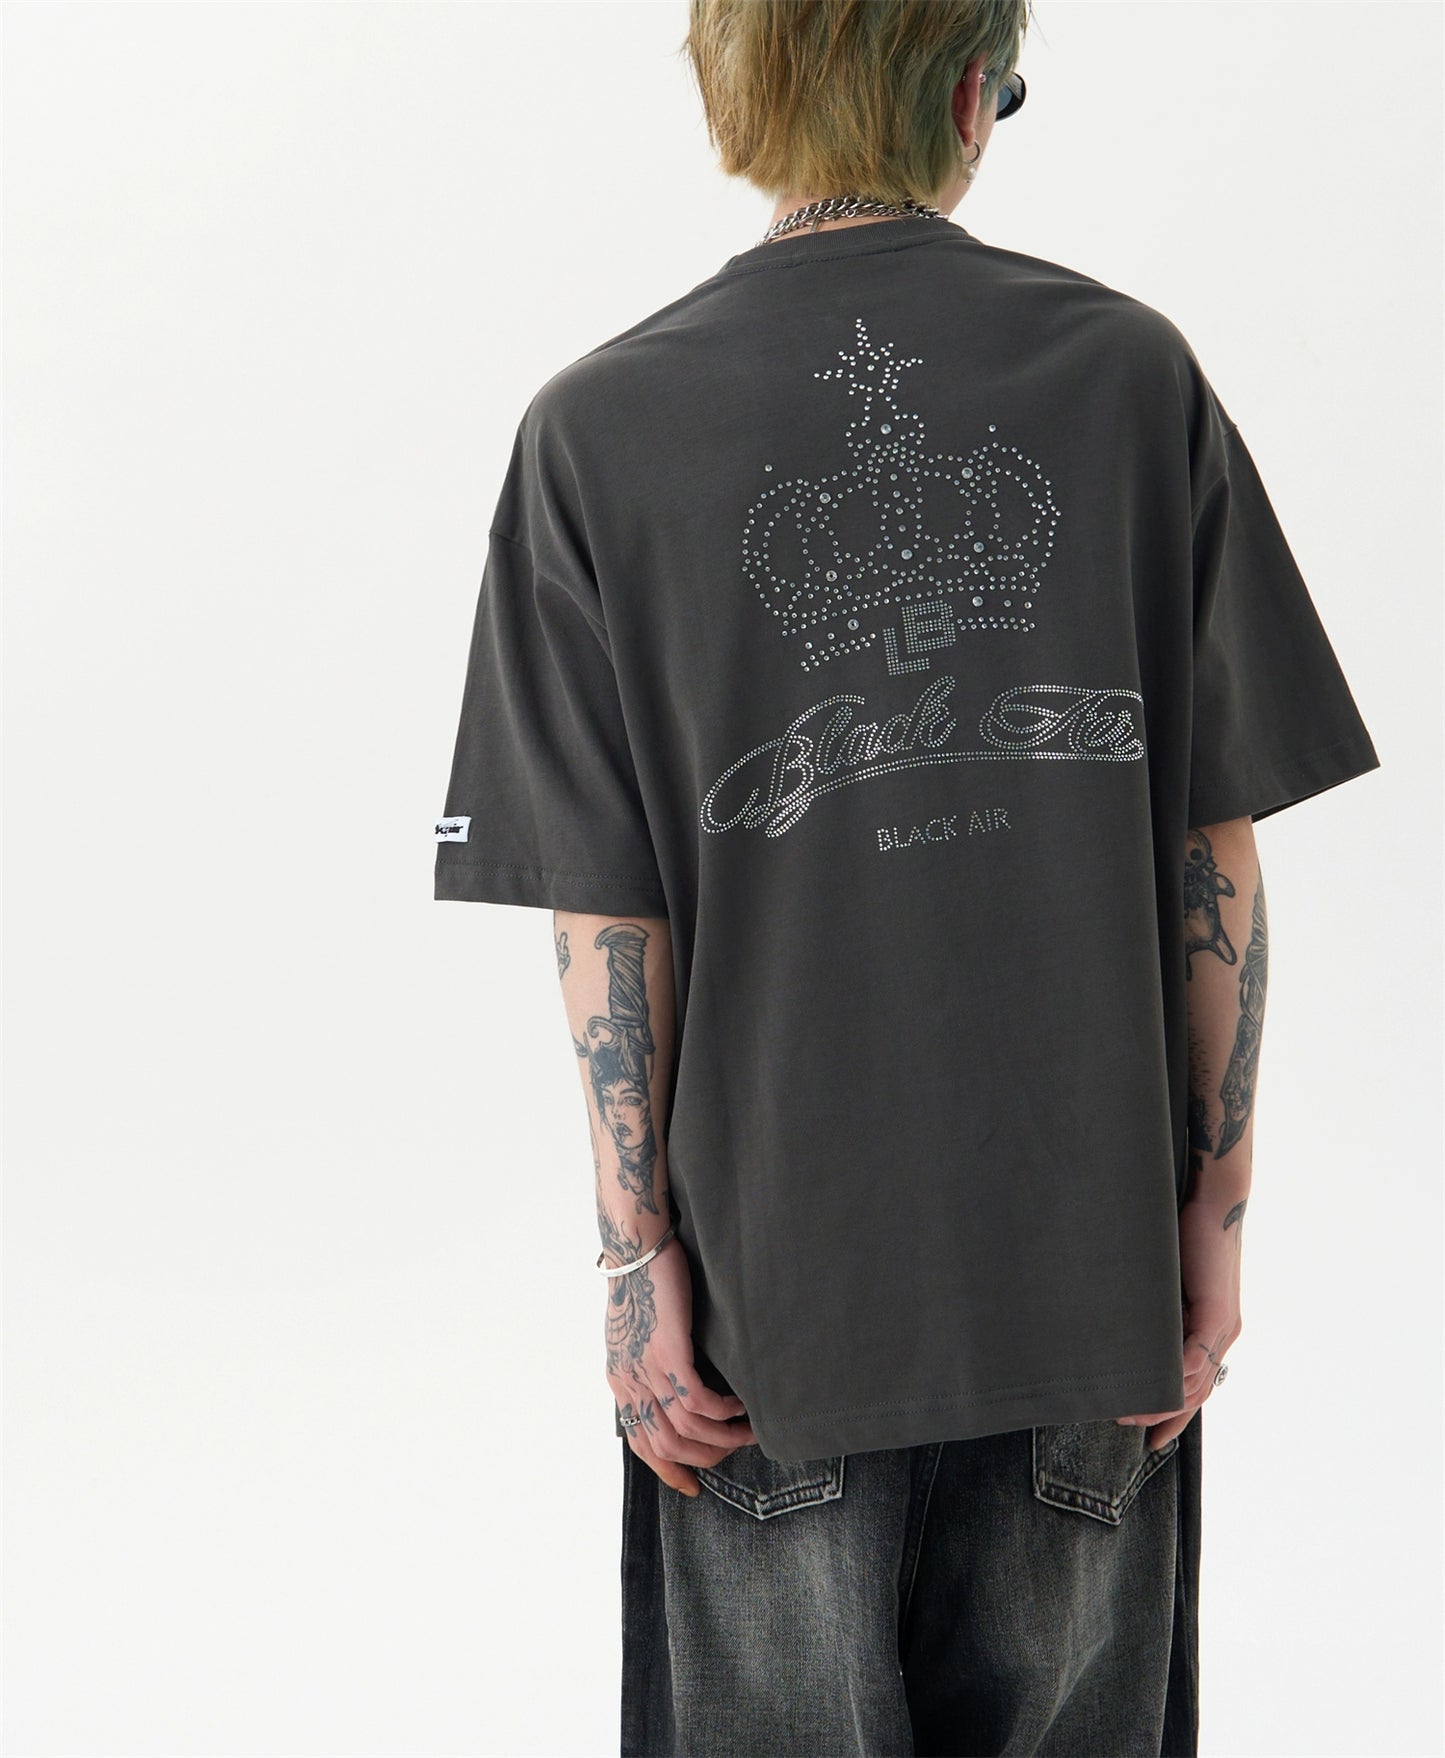 Studs Design Neckline Metal Buckle Short Sleeve Basic T-Shirt WN5078